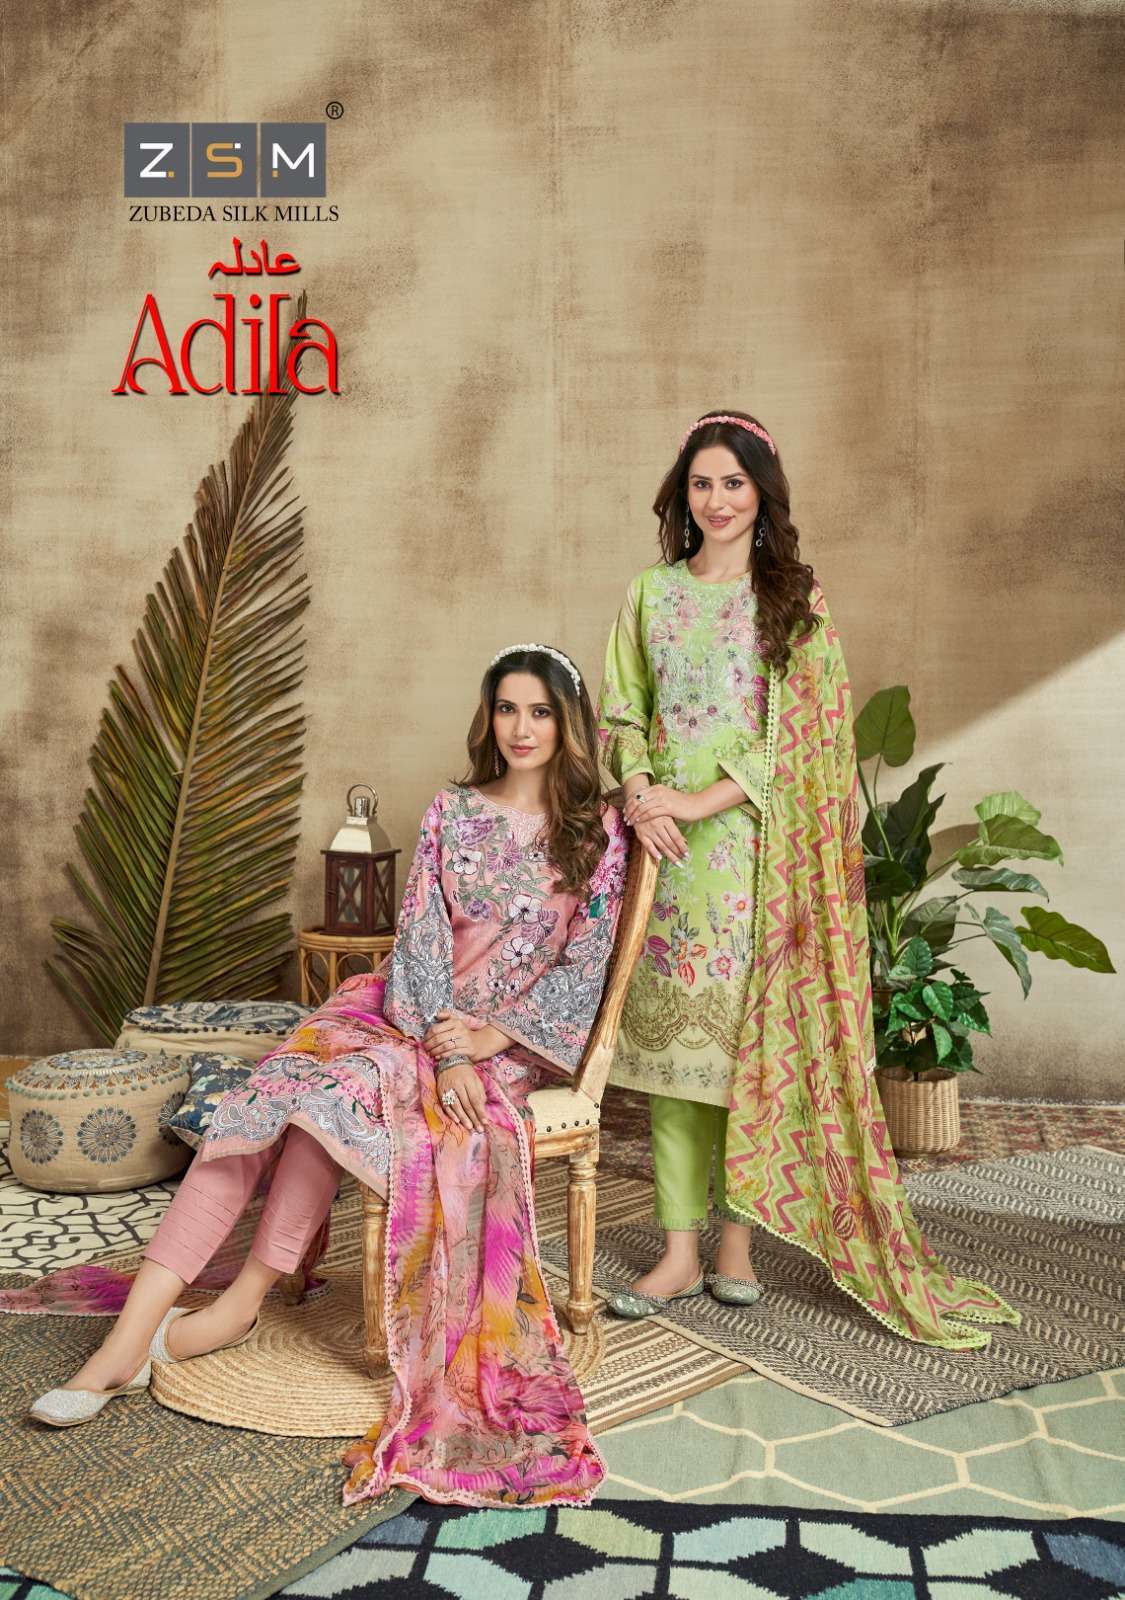 zubeda silk mills adila series 10001-10008 Pure lawn cotton suit